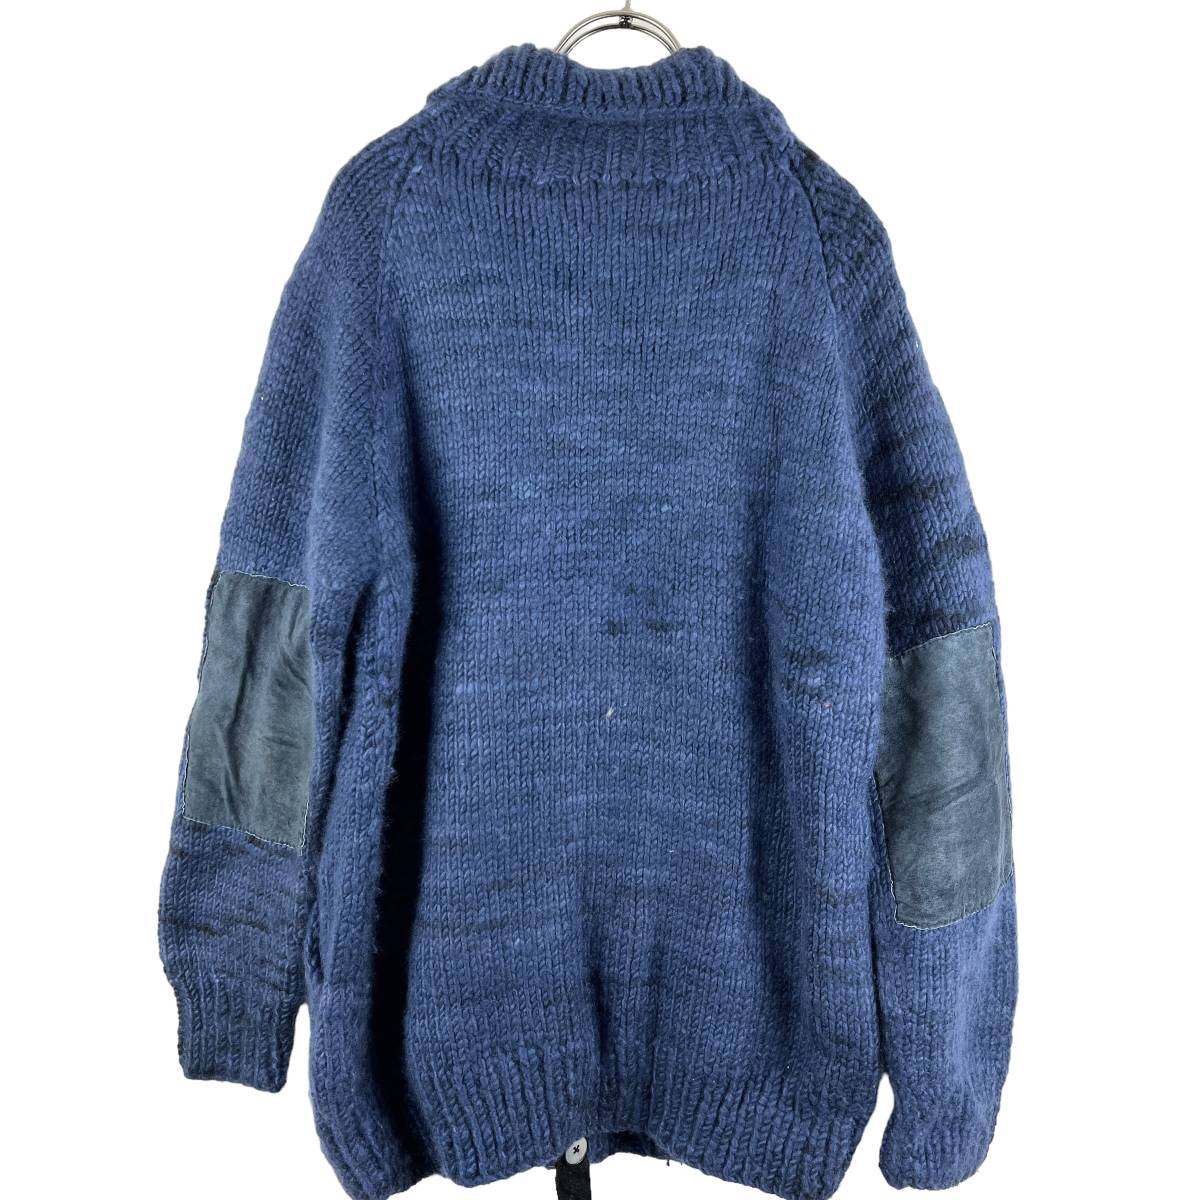 RAIF ADELBERG(レイフ) Patched Sleeve Cashmere Knit Cardigan 定価40万 (navy)